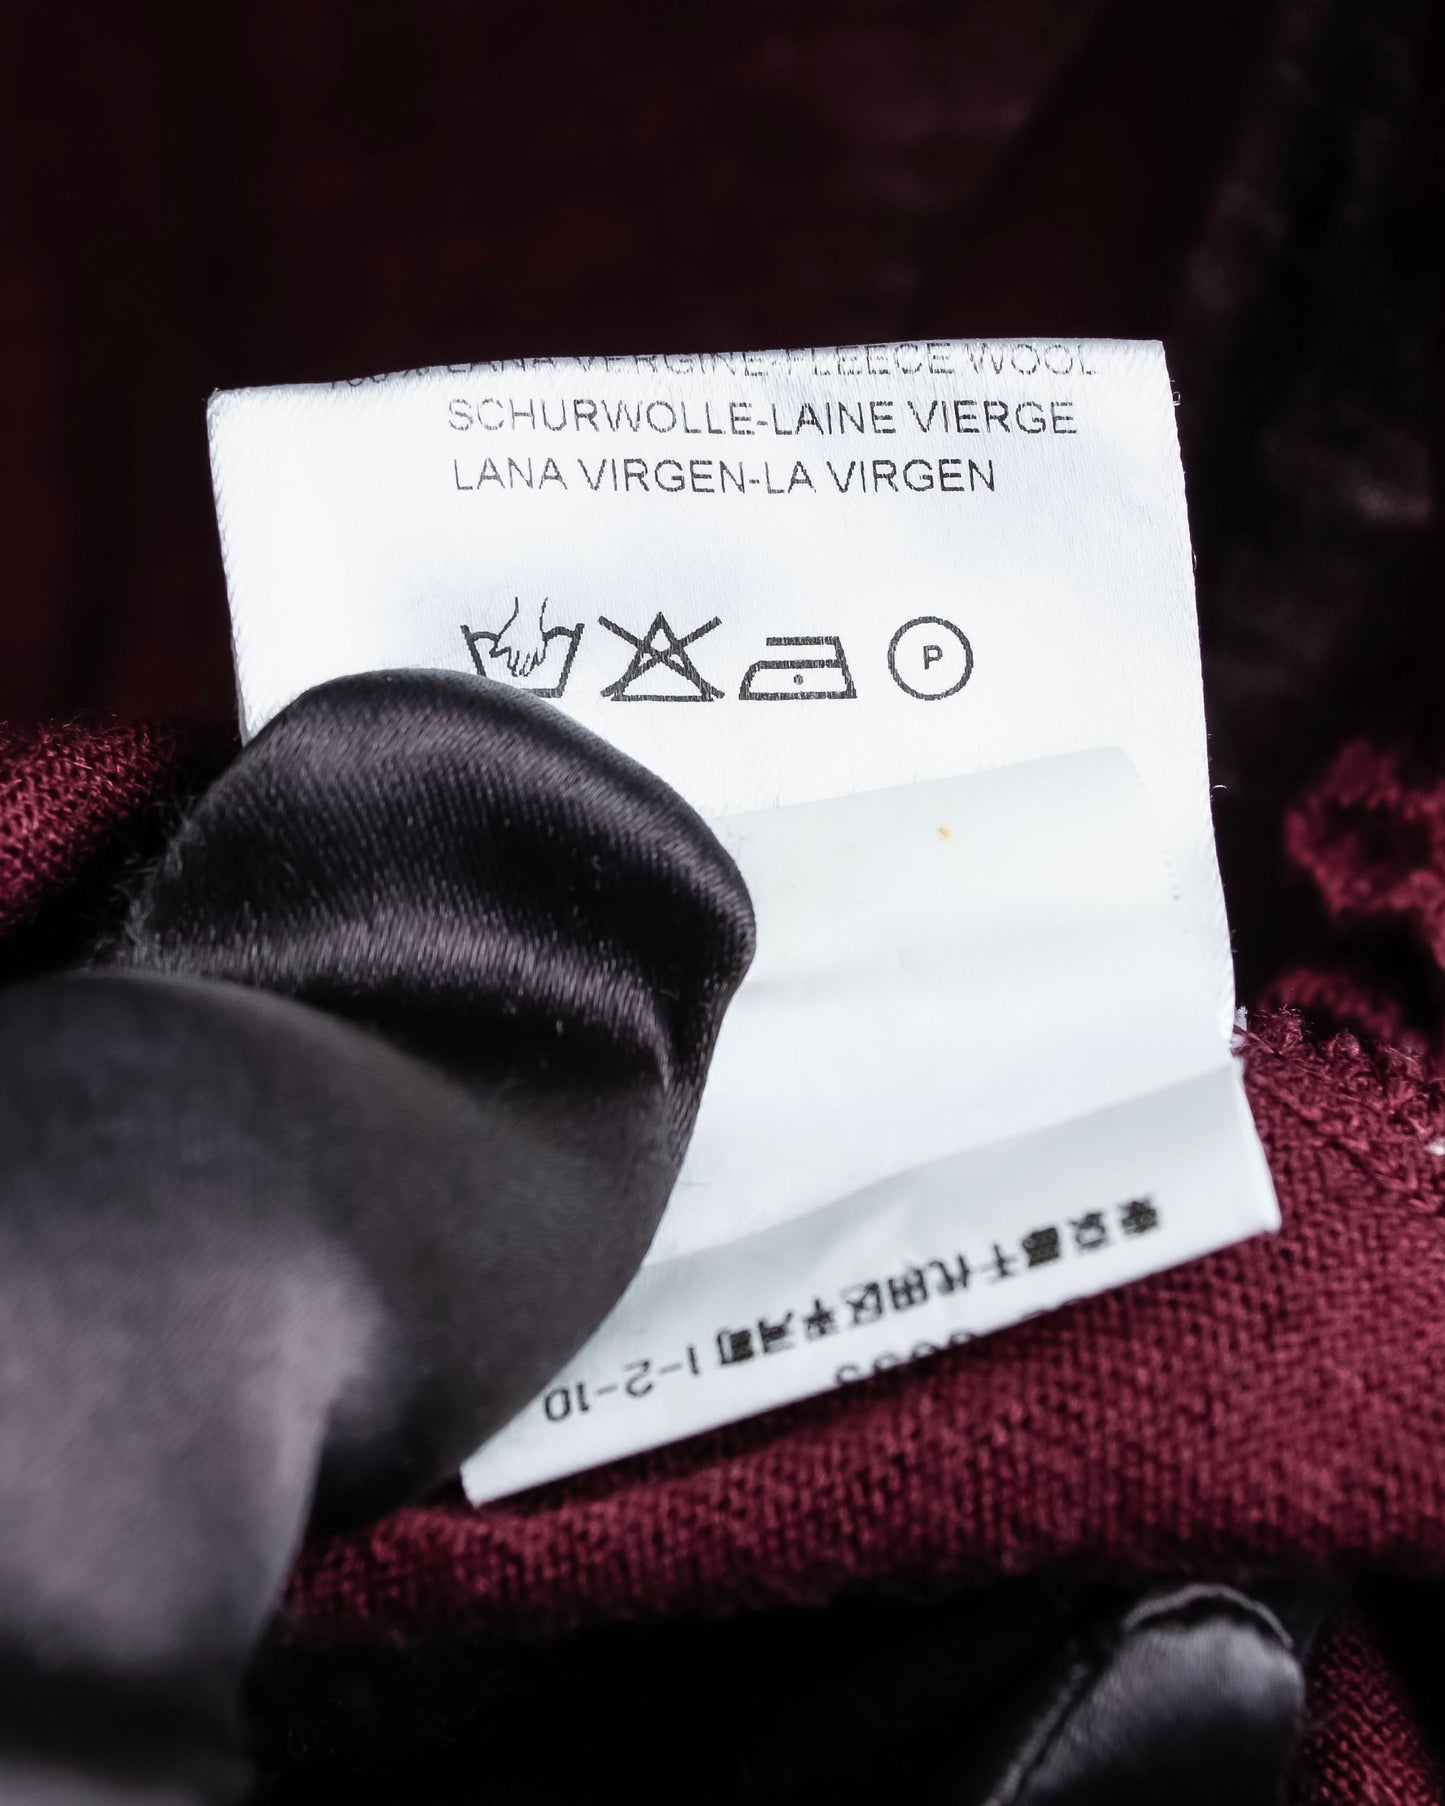 "VALENTINO"Virgin wool ruffled flower design cardigan